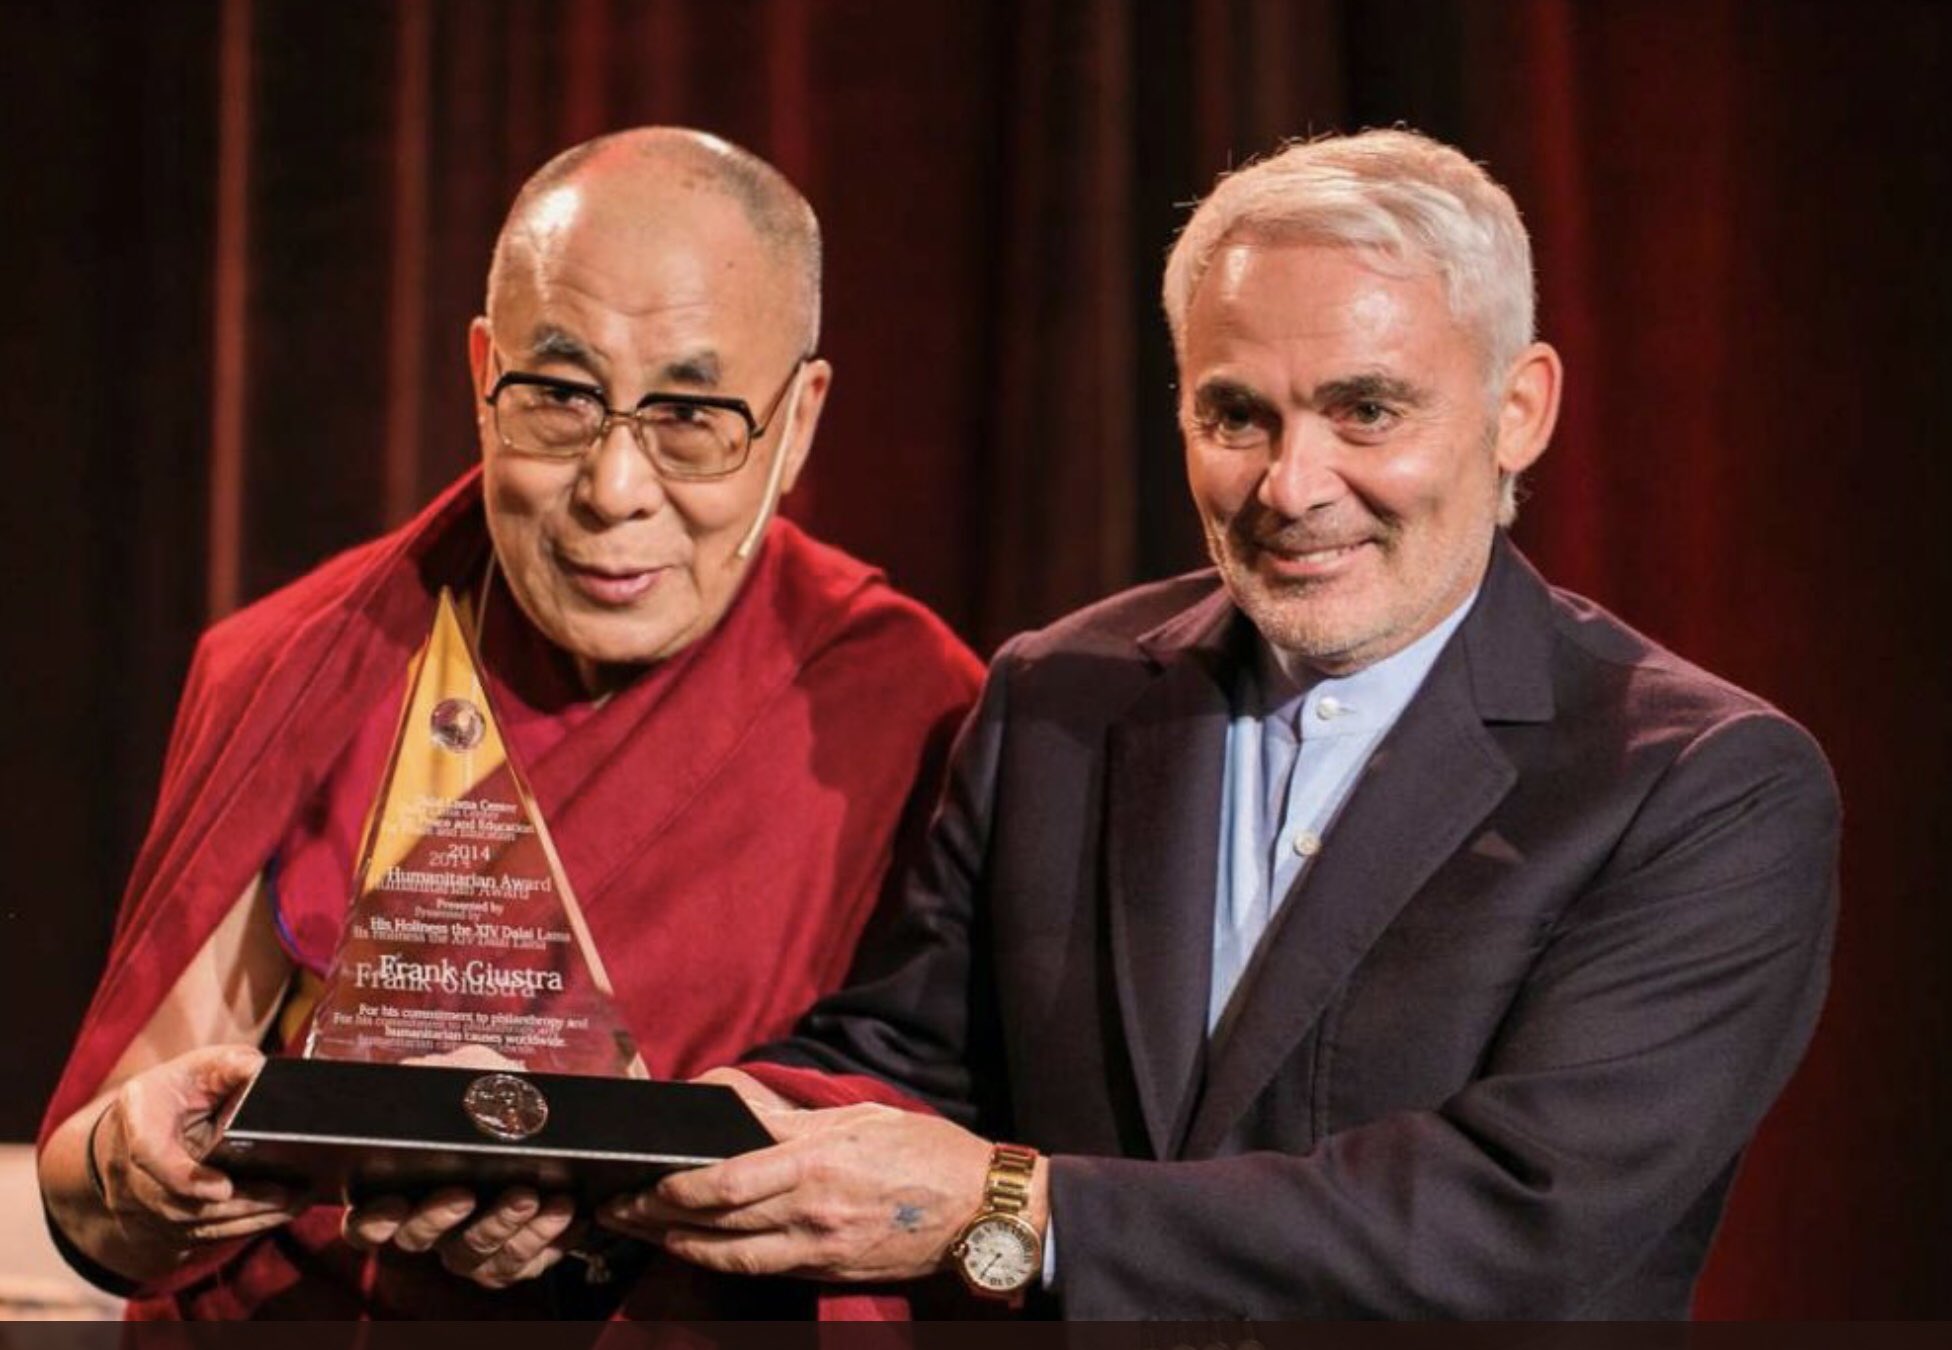 Happy 85th Birthday to the Dalai Lama - One of the true greats!   